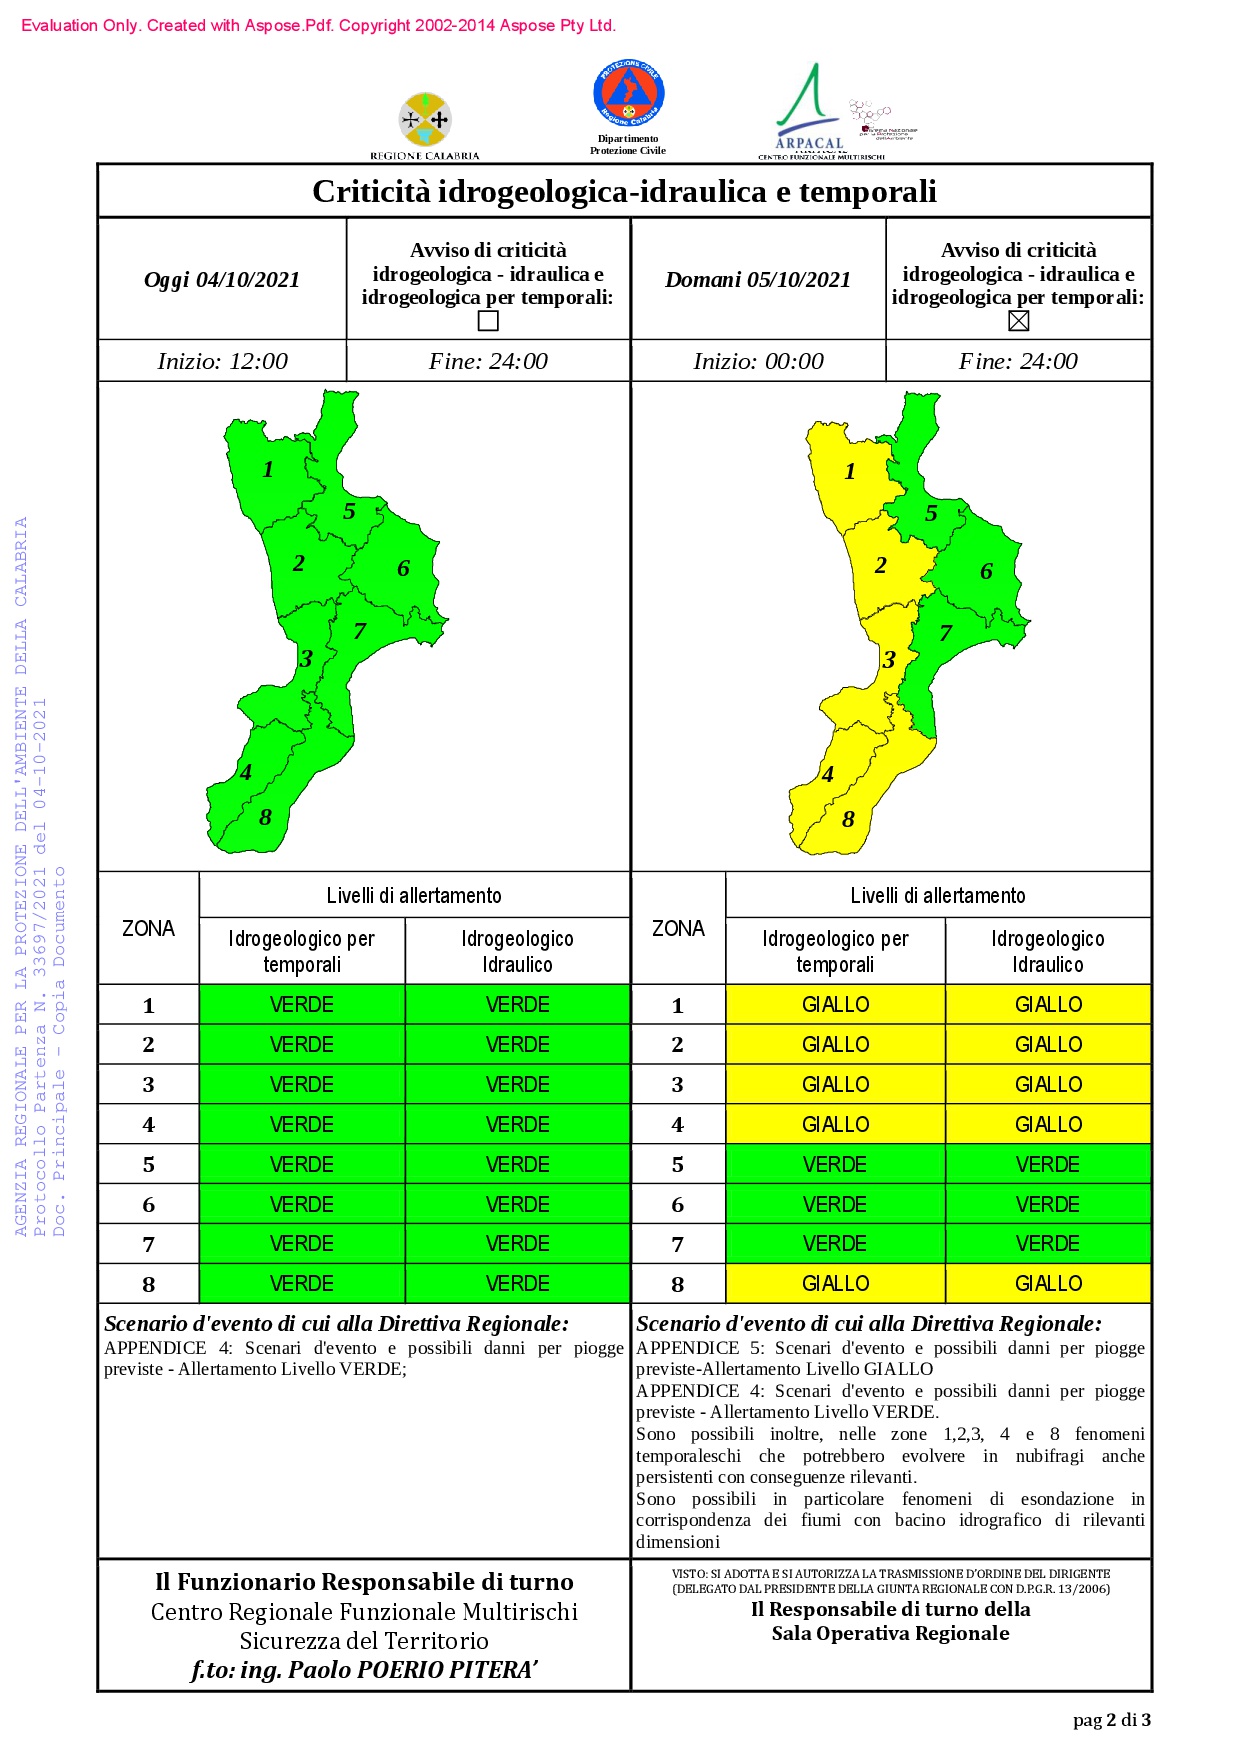 Criticità idrogeologica-idraulica e temporali in Calabria 04-10-2021